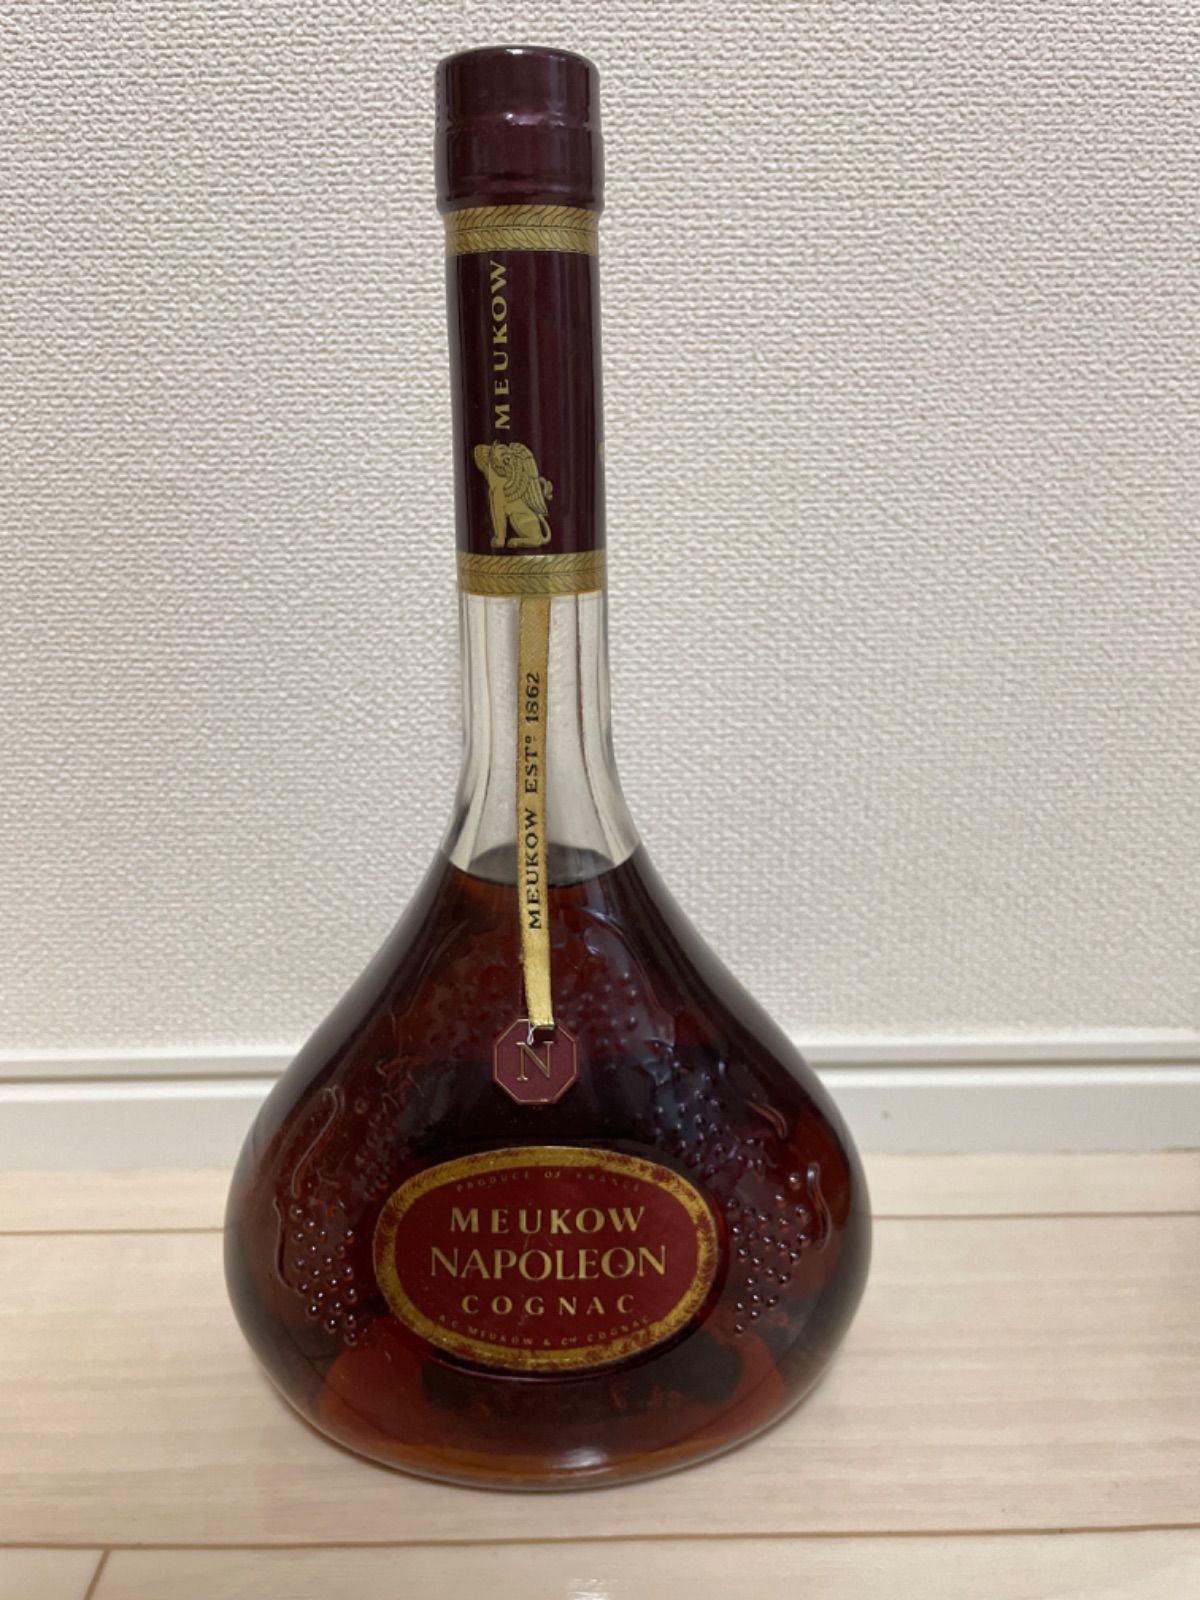 NAPOLEON・COGNAC・MEUKOW・ブランデー - 酒